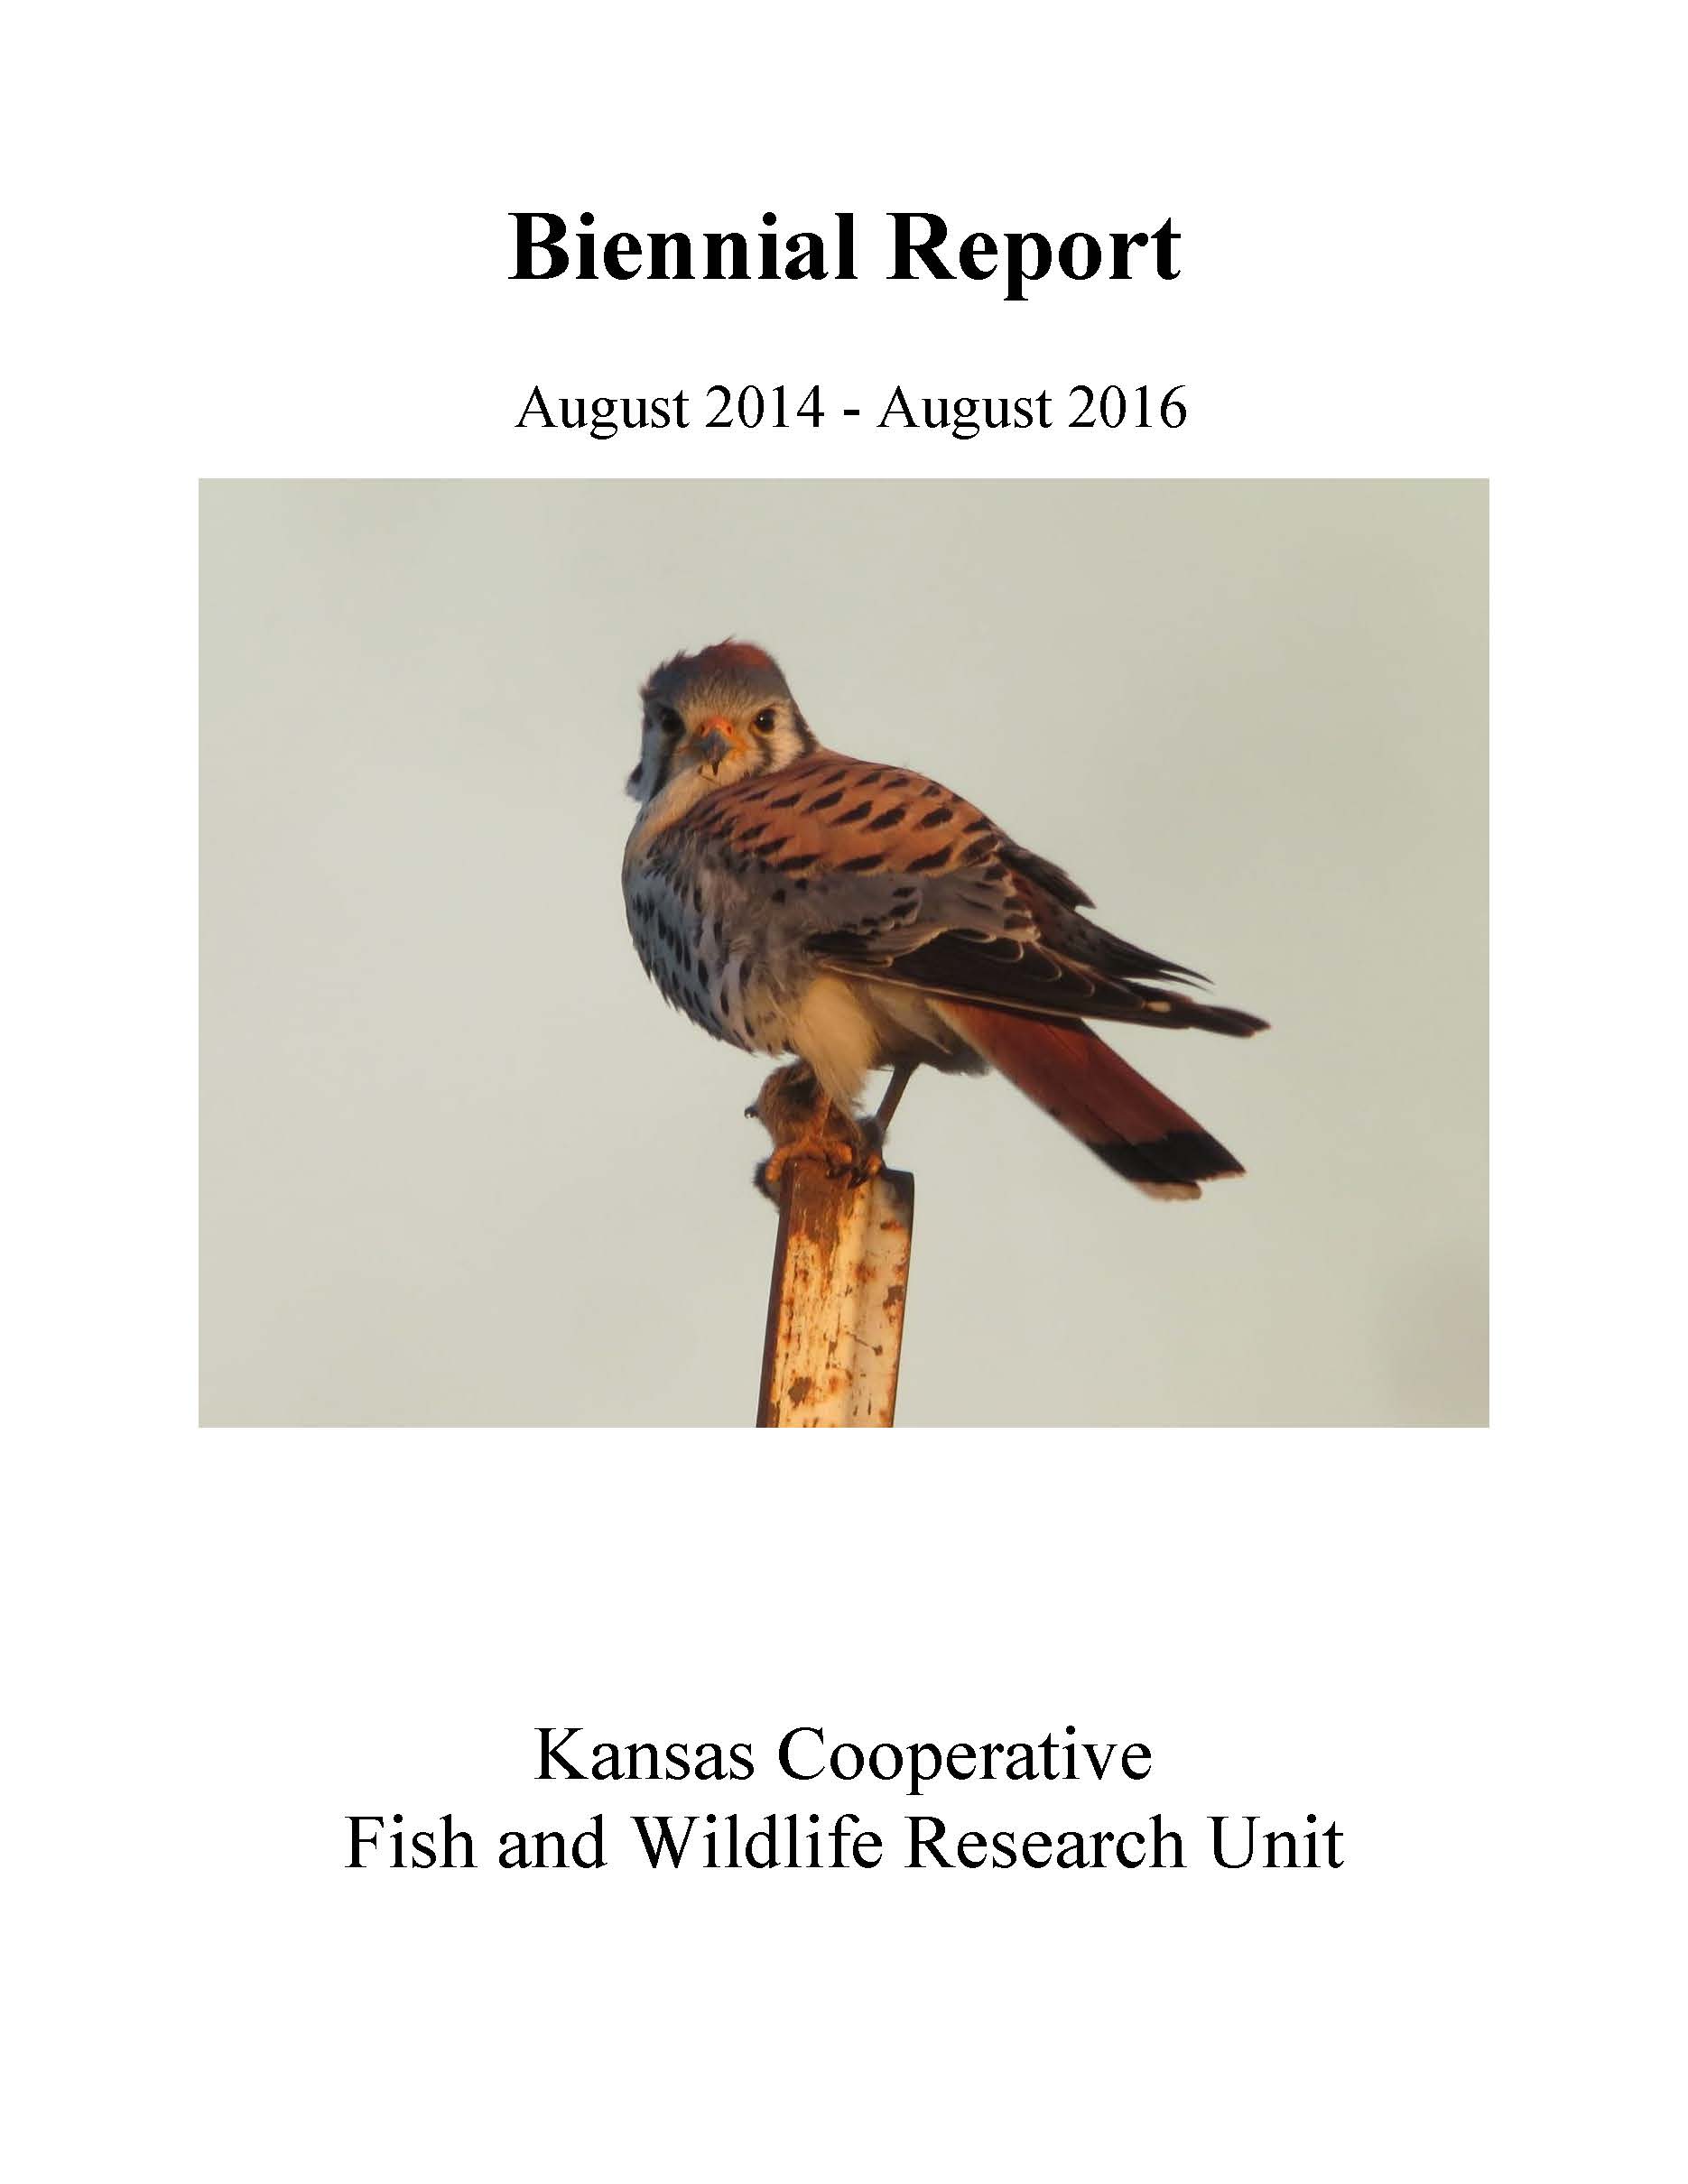 KSCFWRU Biennial Report 2016